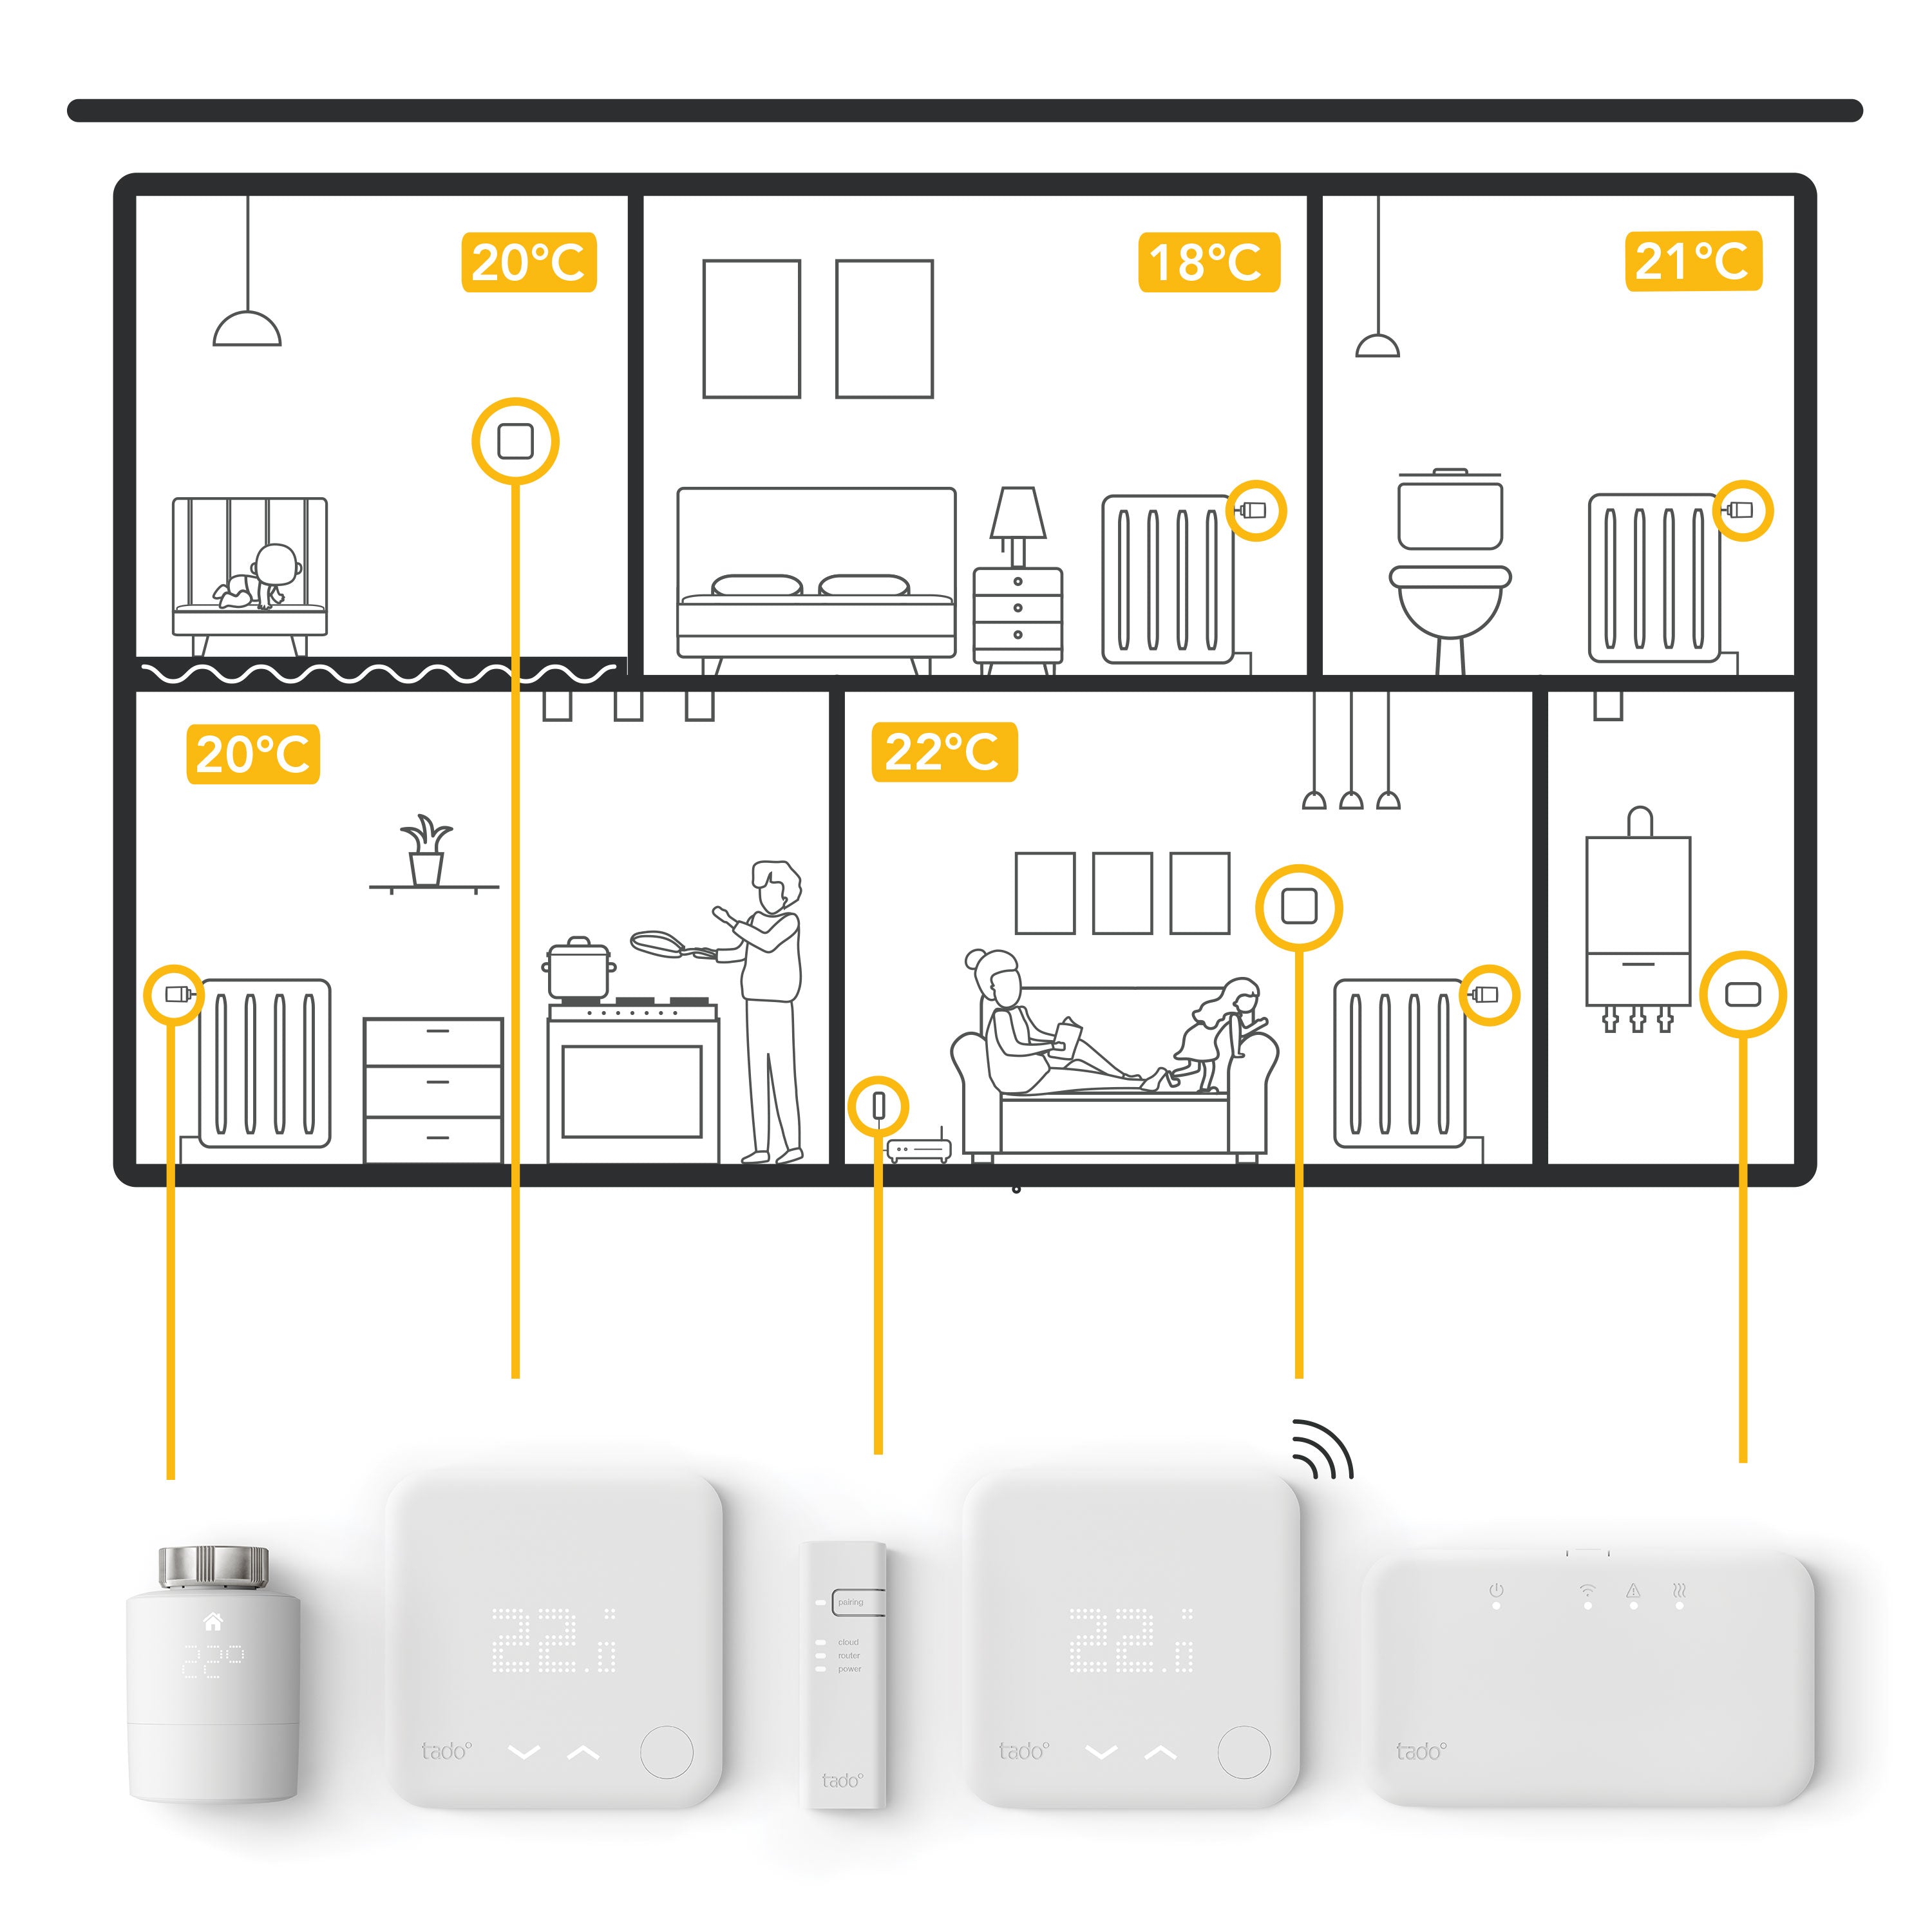 Starter kit - Wired Smart Thermostat V3+